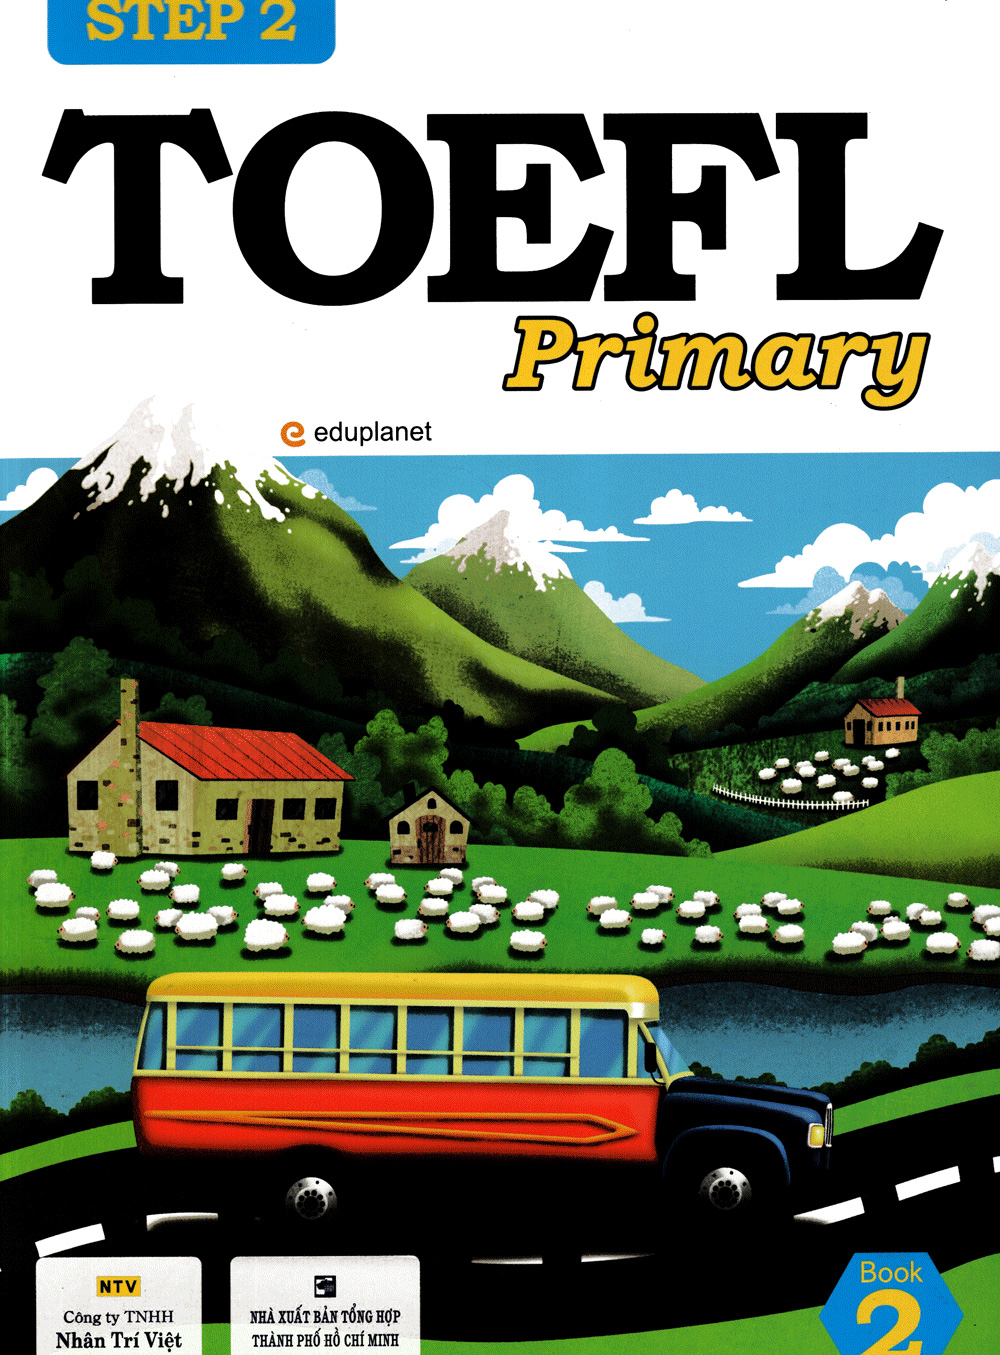 Toefl Primary Step 2: Book 2 PDF